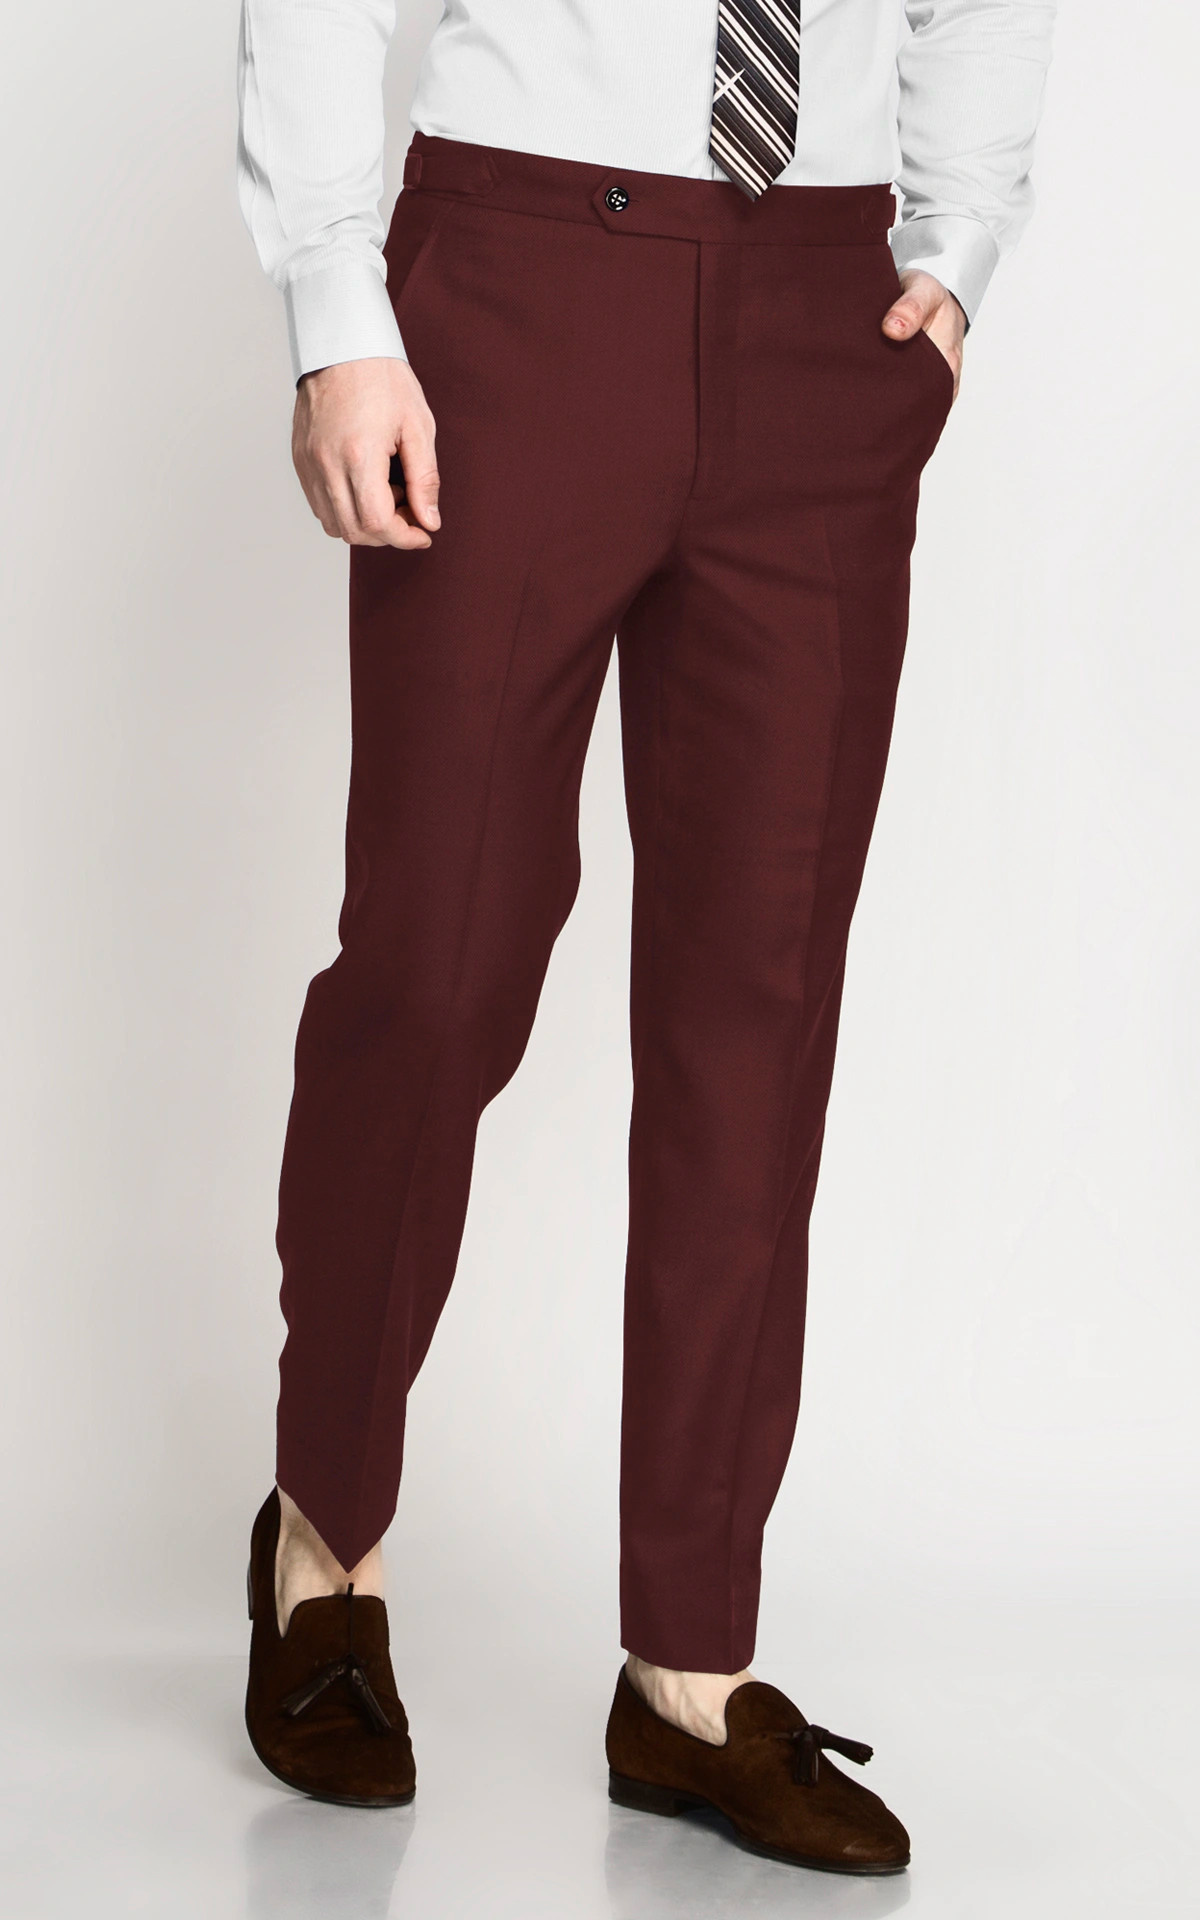 Burgundy Straight Leg Pants with Pockets and Belt - Walmart.com